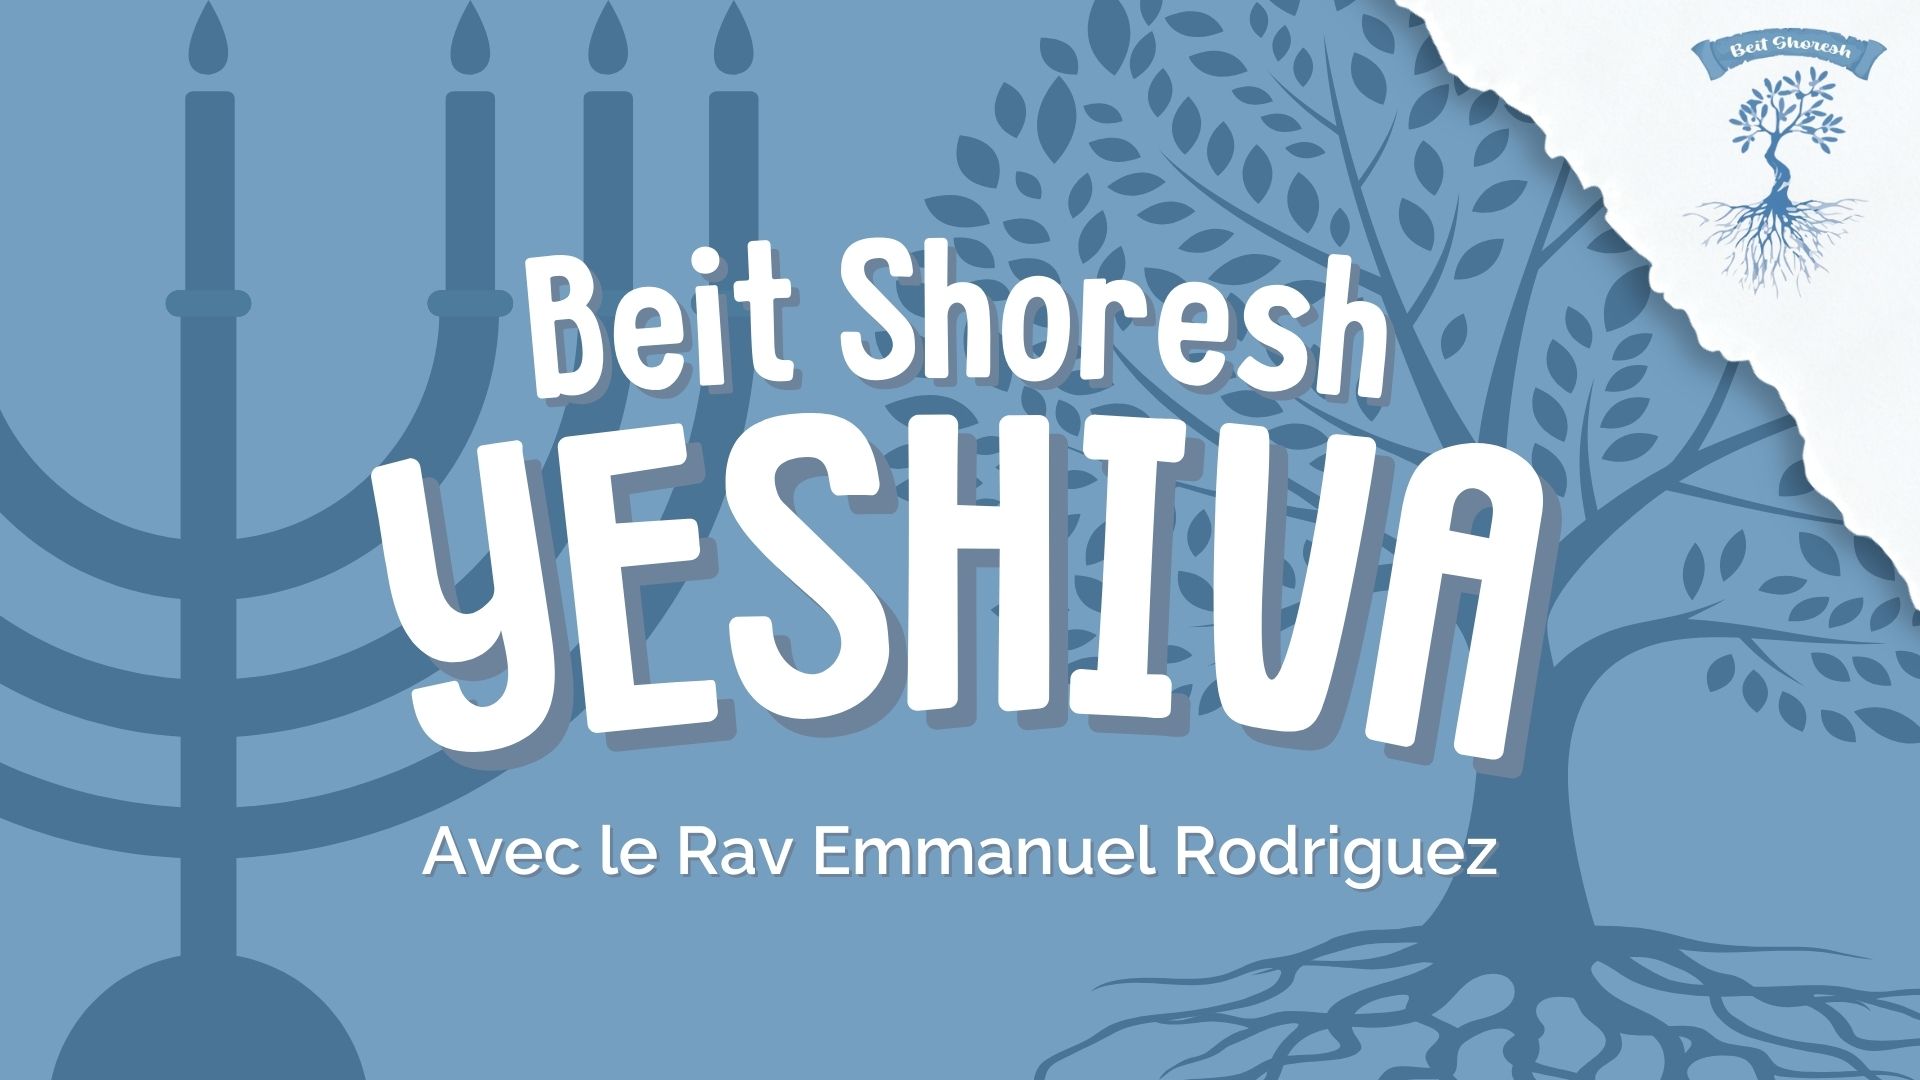 Yeshiva avec le Rav Emmanuel